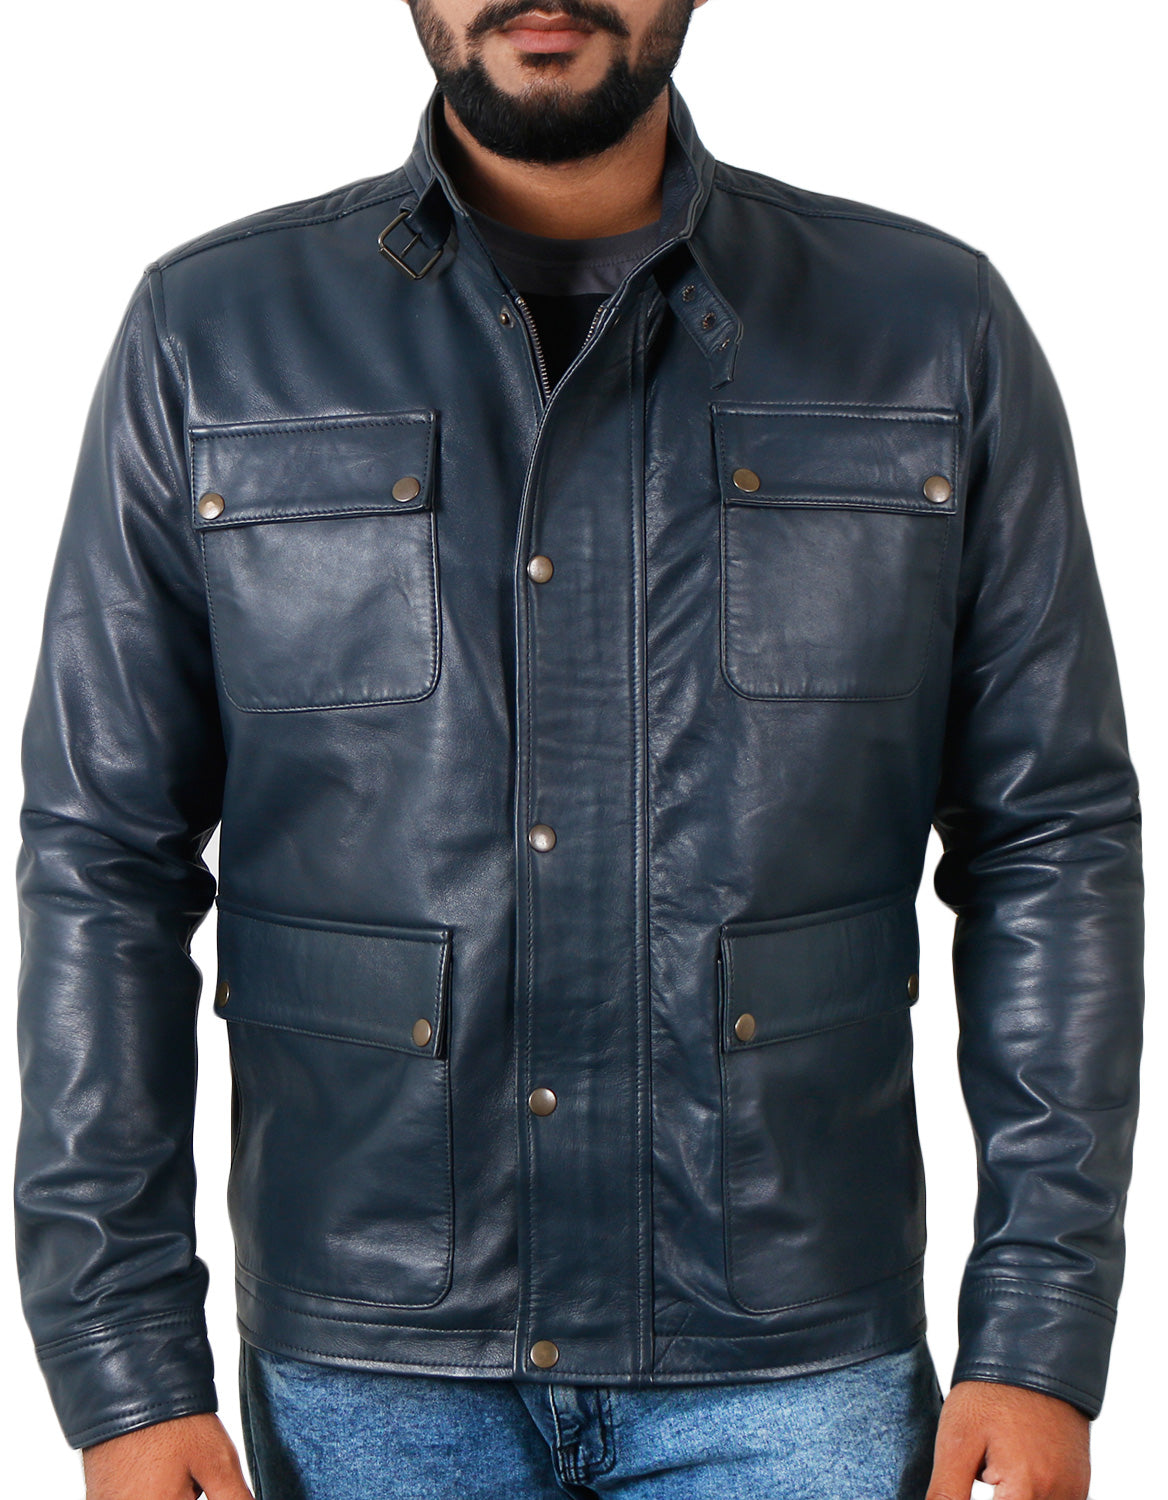 Leather Jackets Hub Mens Genuine Lambskin Leather Jacket (Black, Officer Jacket) - 1501024